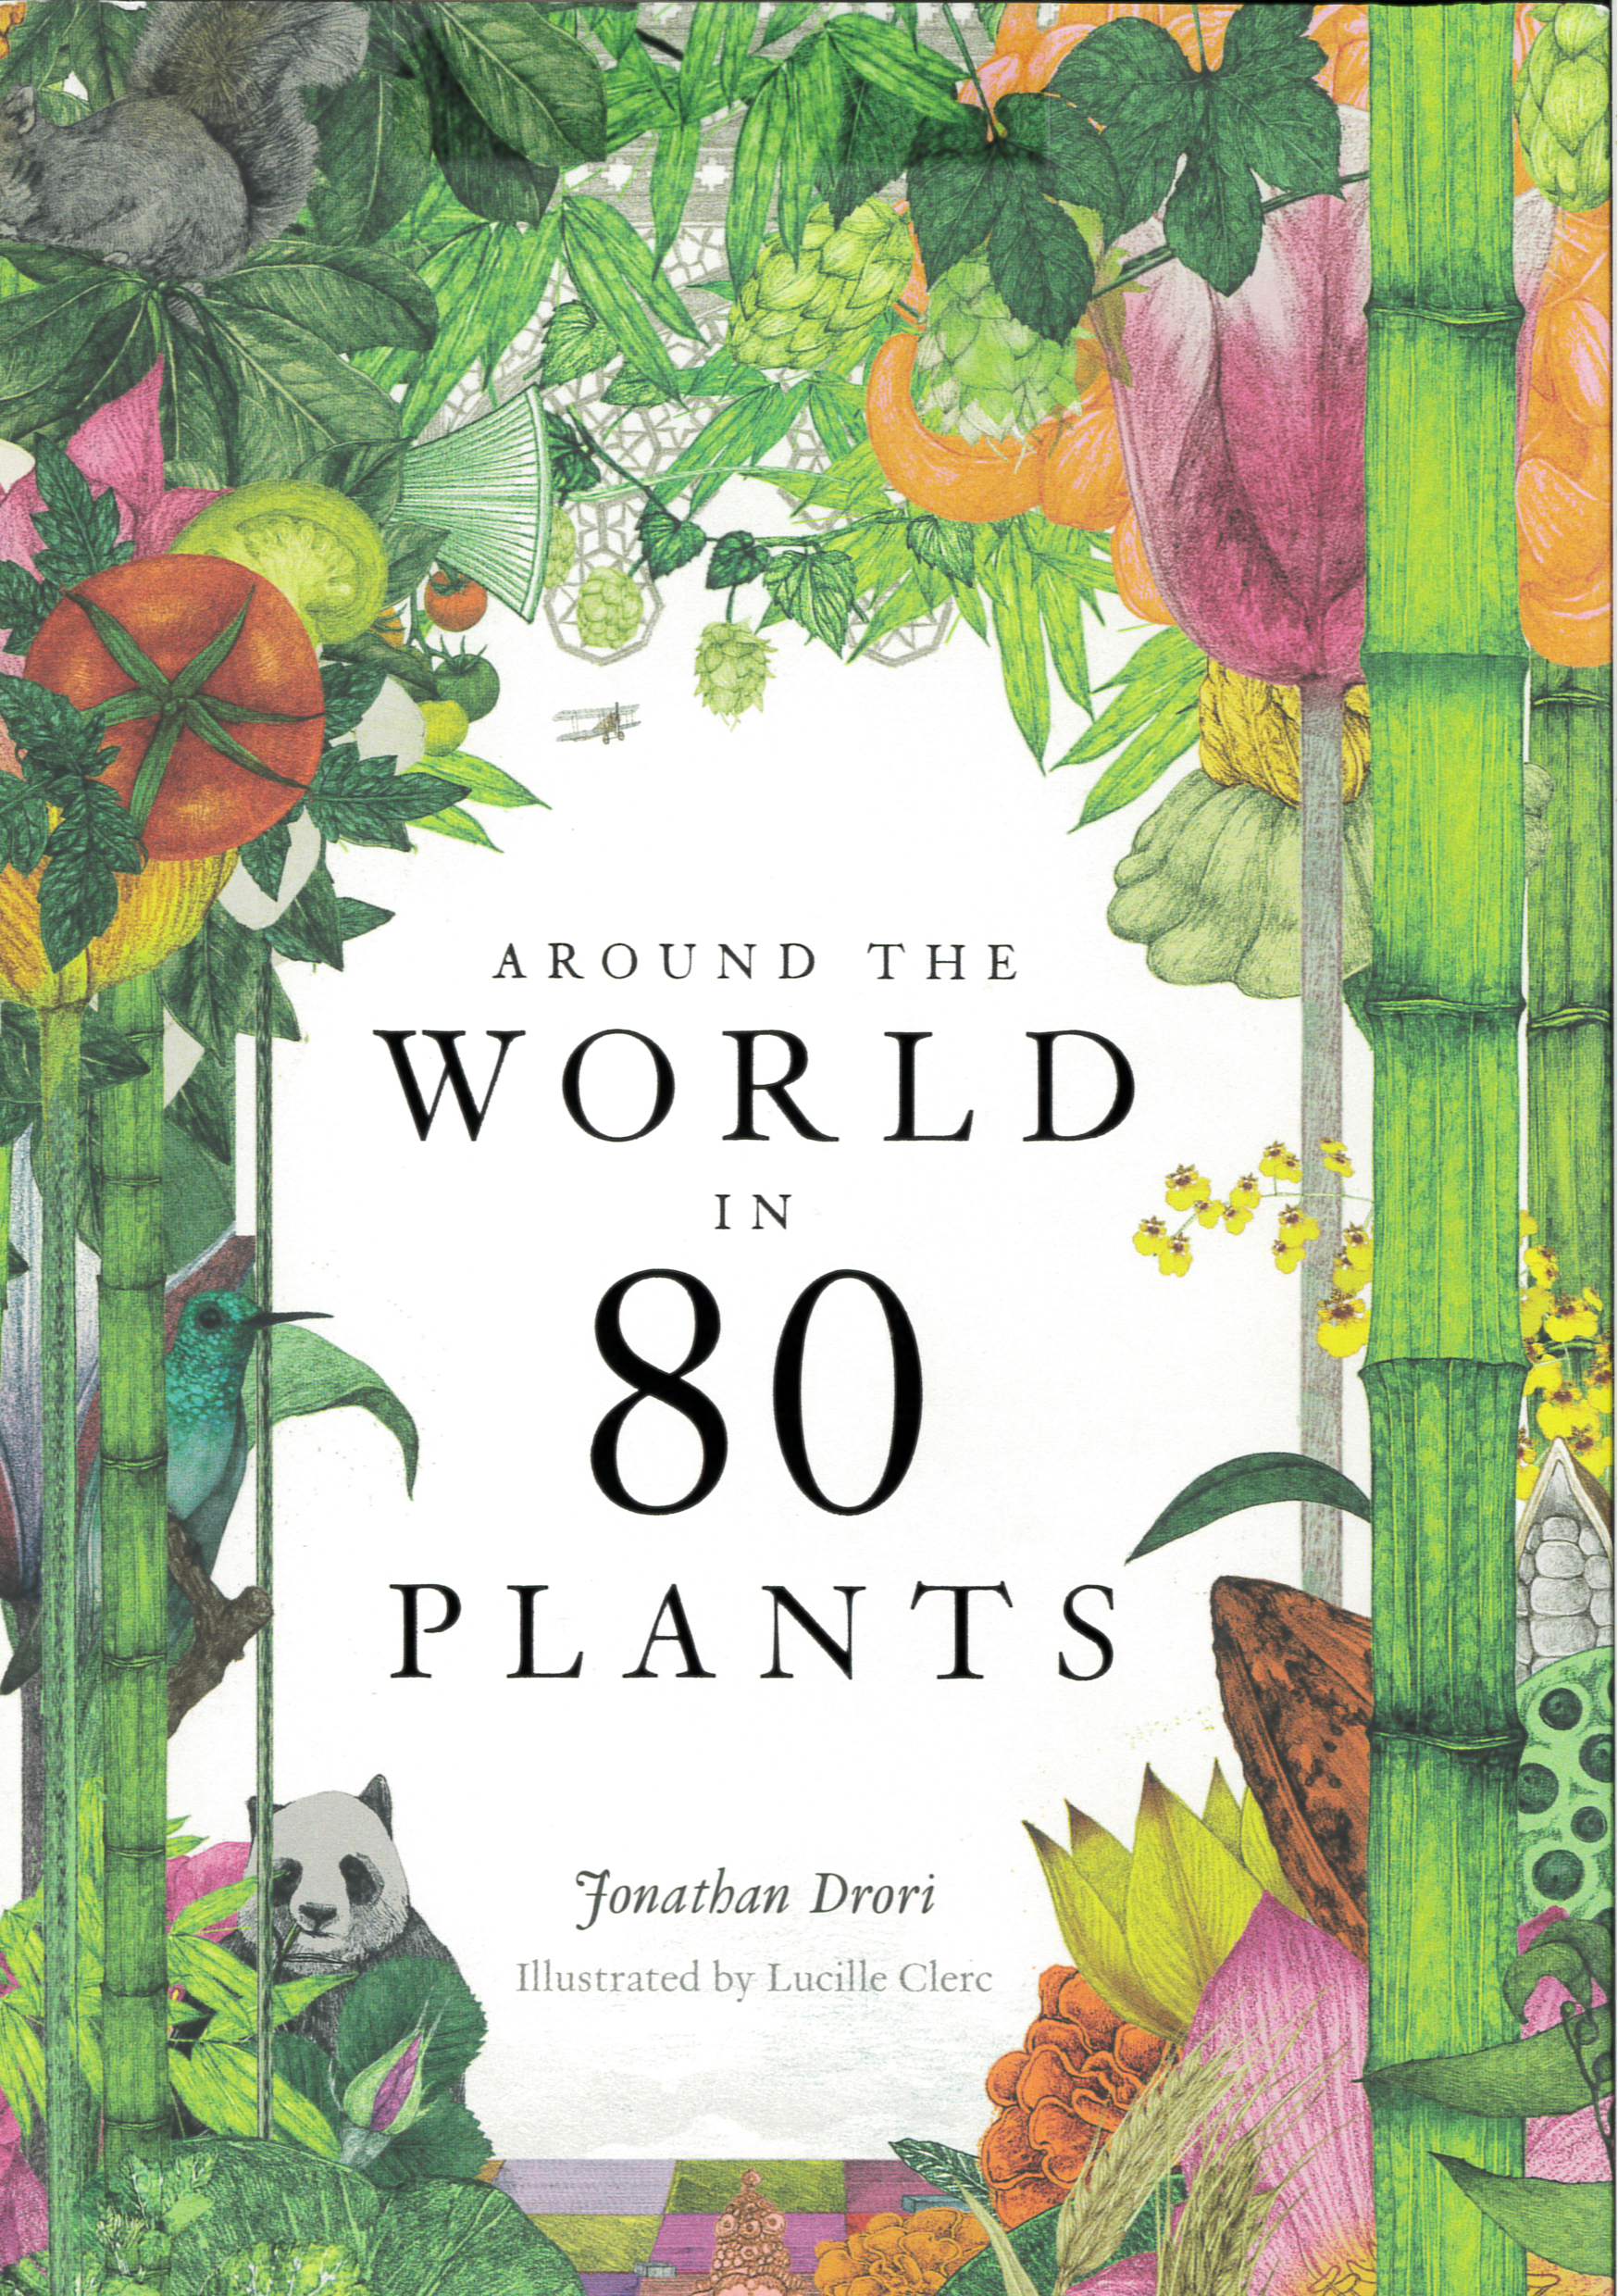 Around the world in 80 plants /